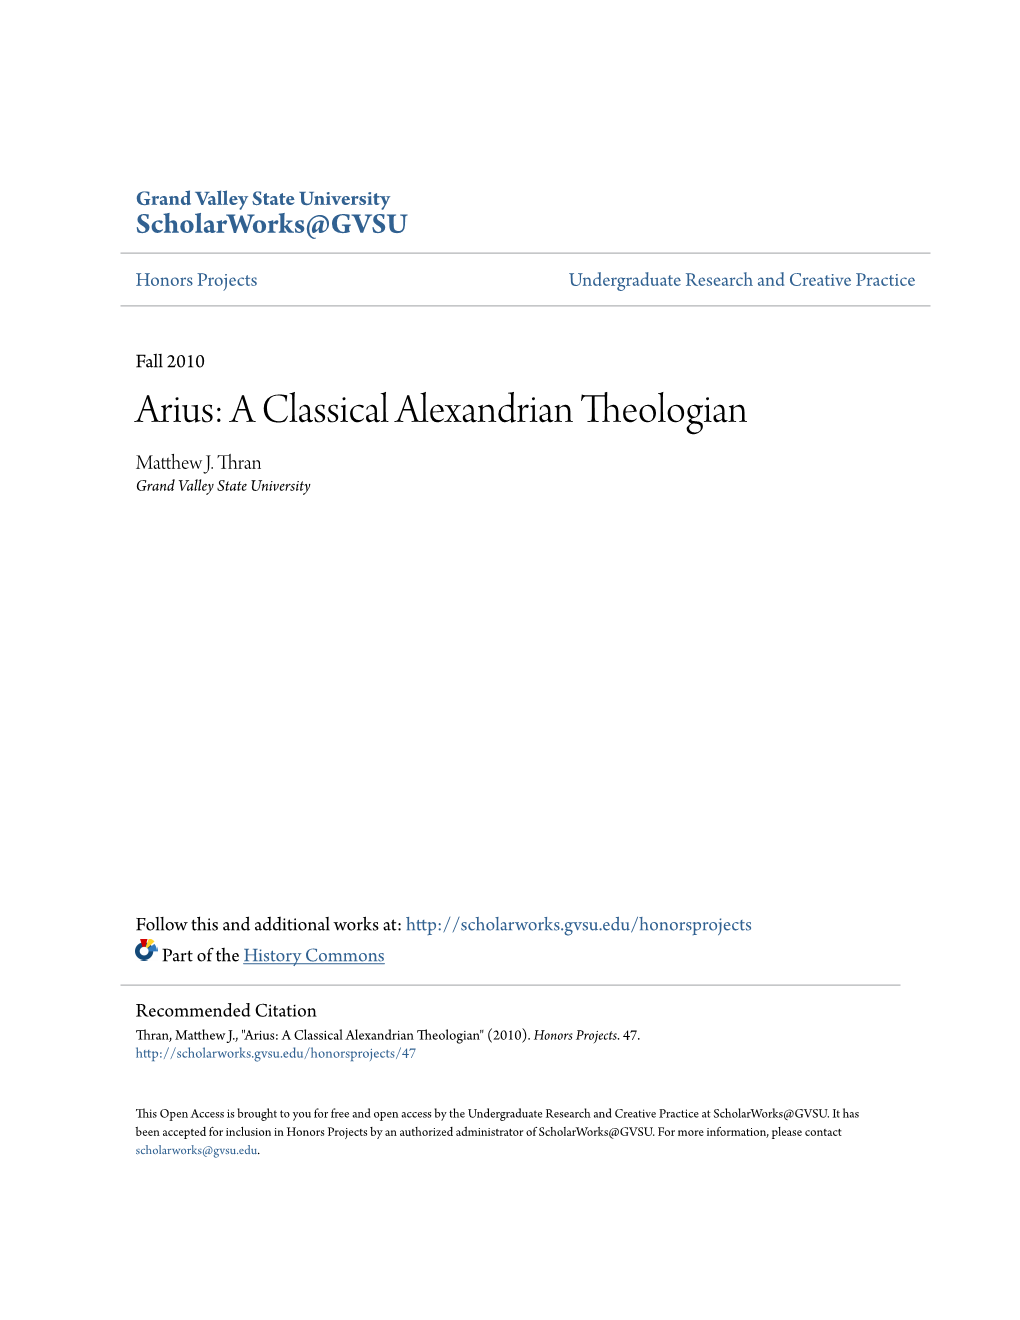 Arius: a Classical Alexandrian Theologian Matthew .J Thran Grand Valley State University